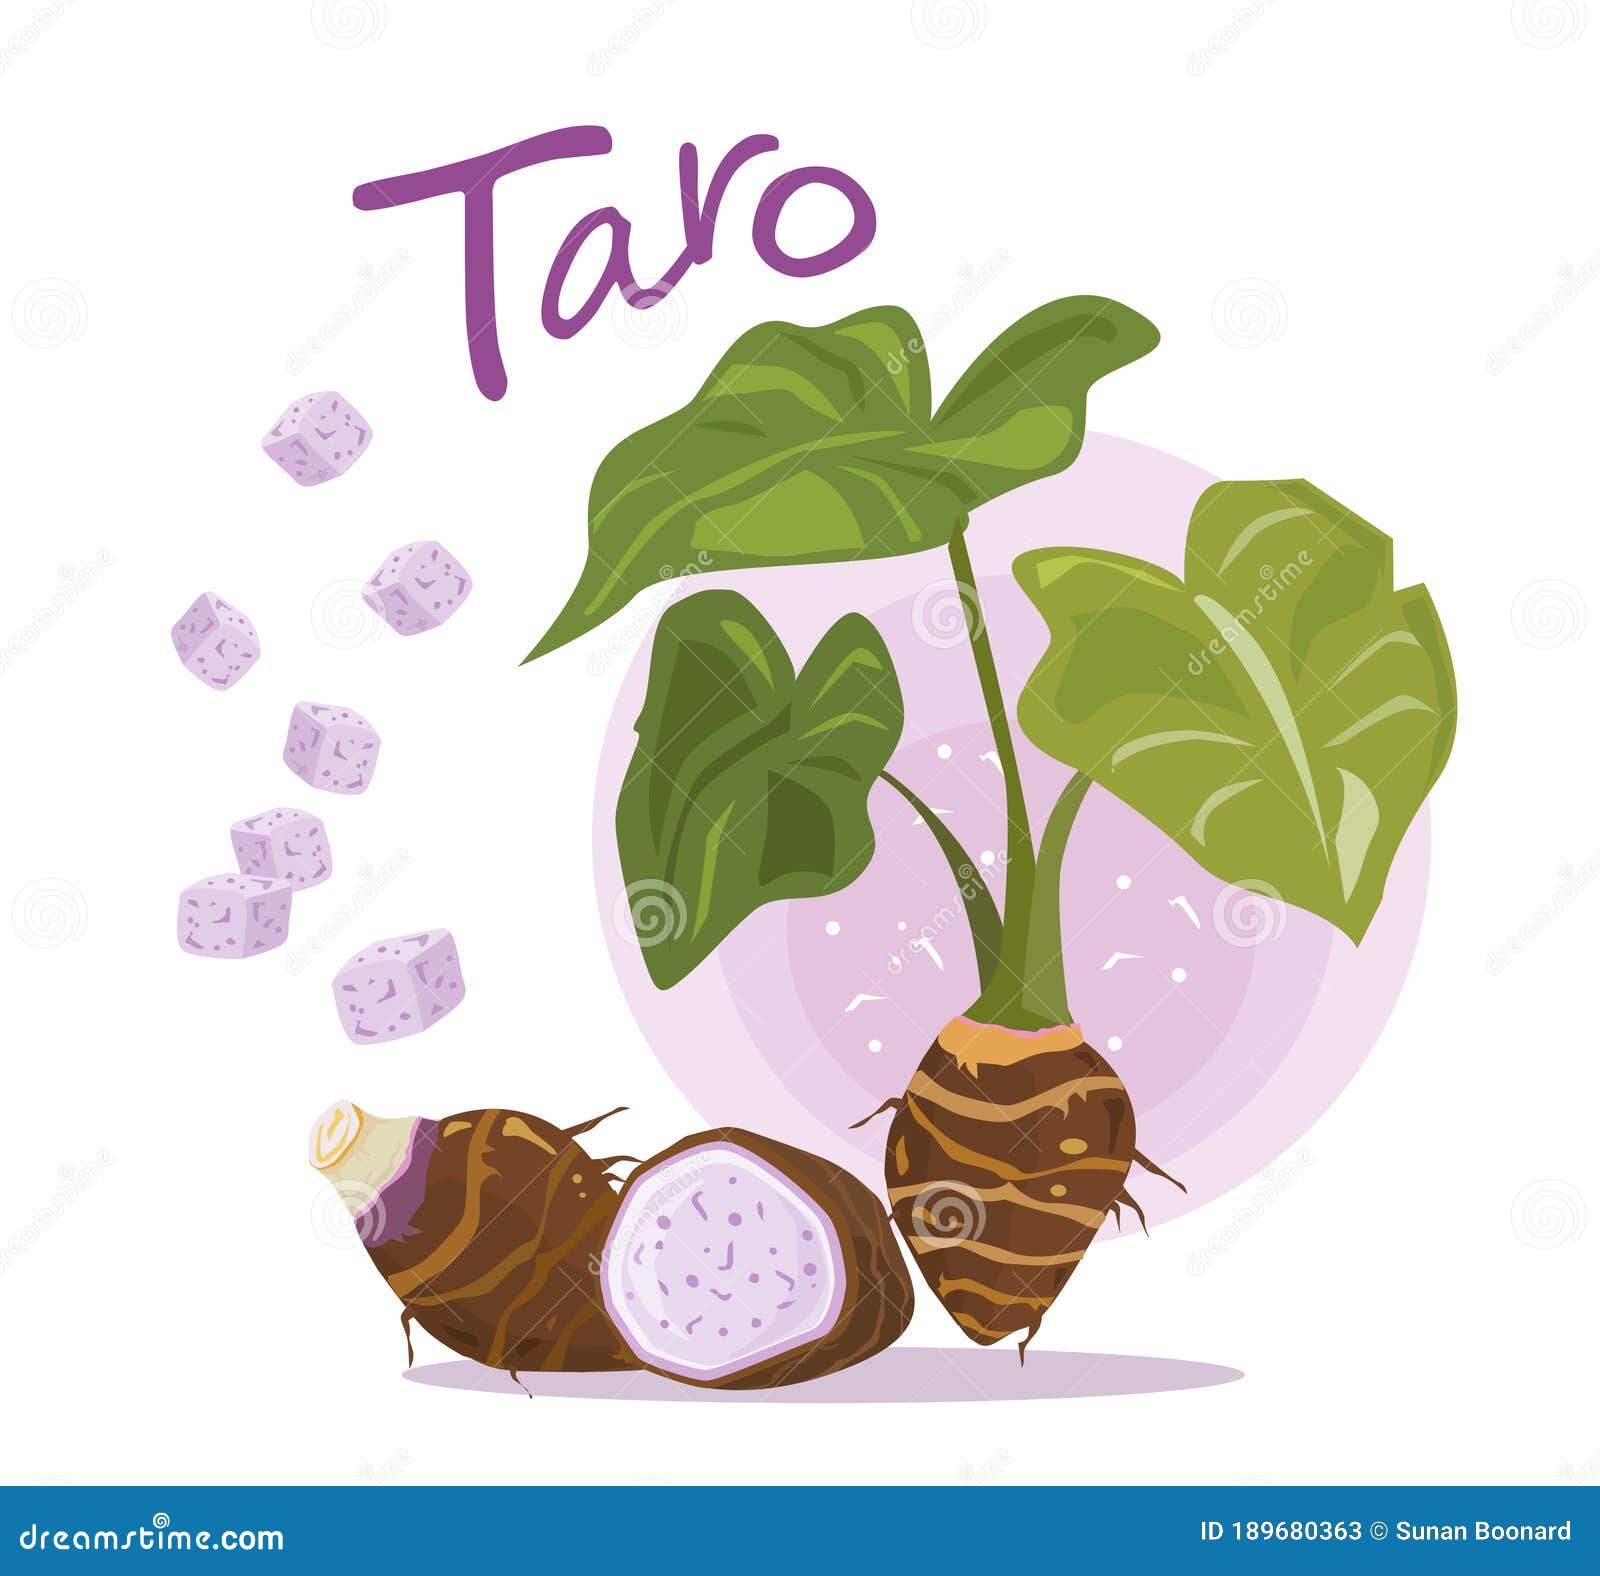 taro root . taro plant. fruit and slice of taro.